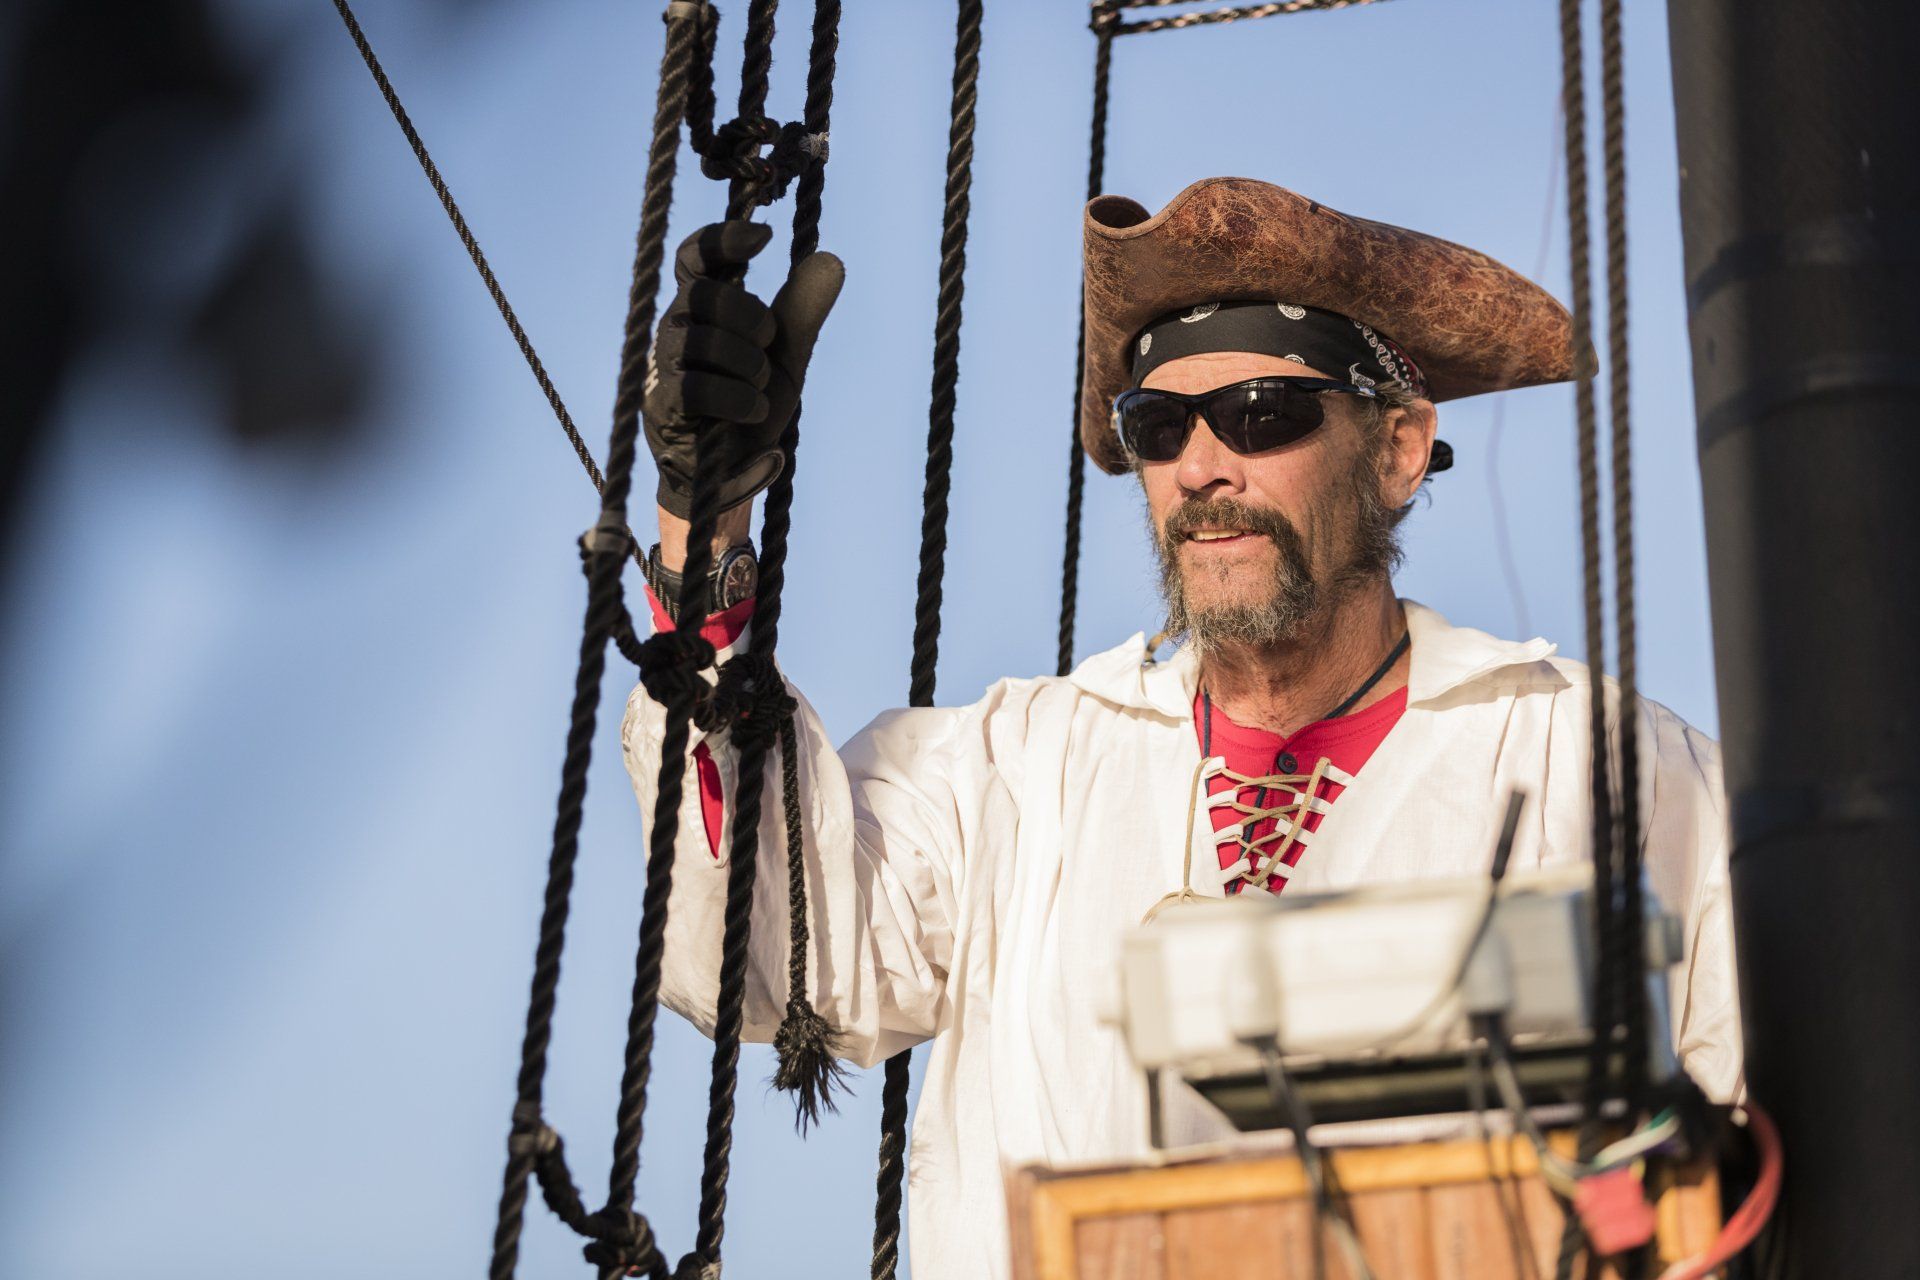 Man dressed as pirate